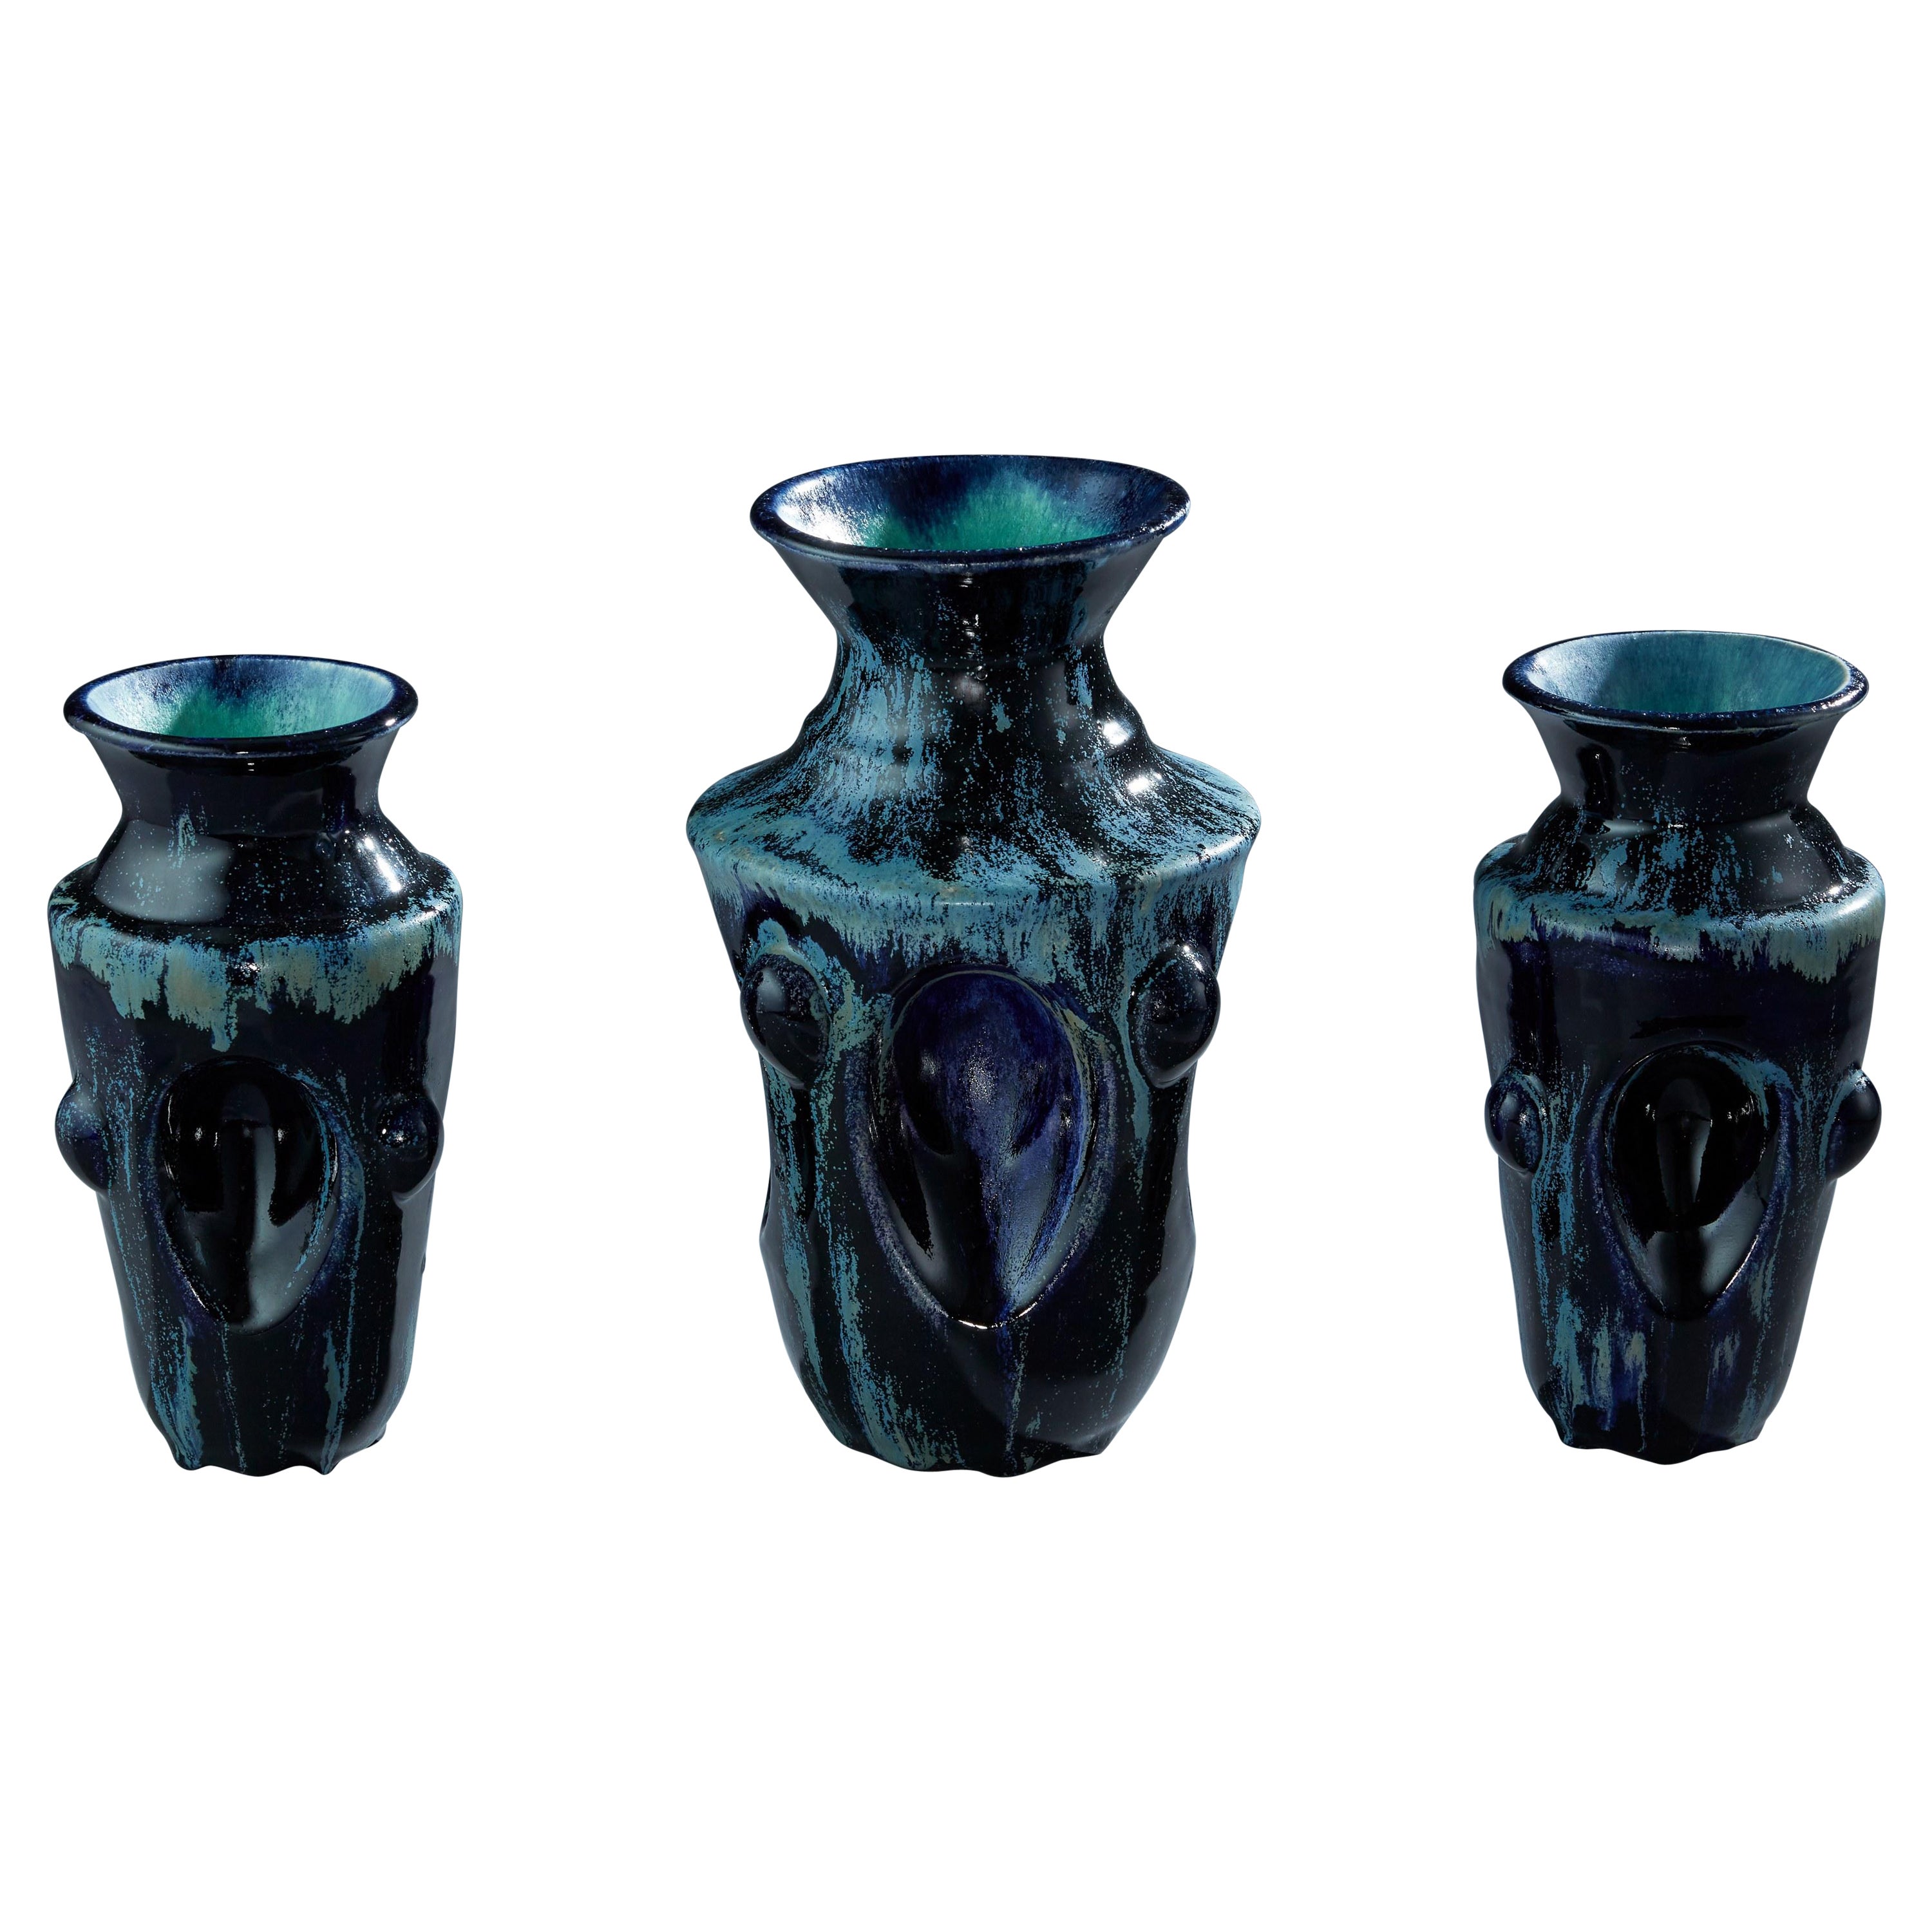 Deep Blue Garniture of Three Vases Contemporary 21st Century Italian Unique For Sale